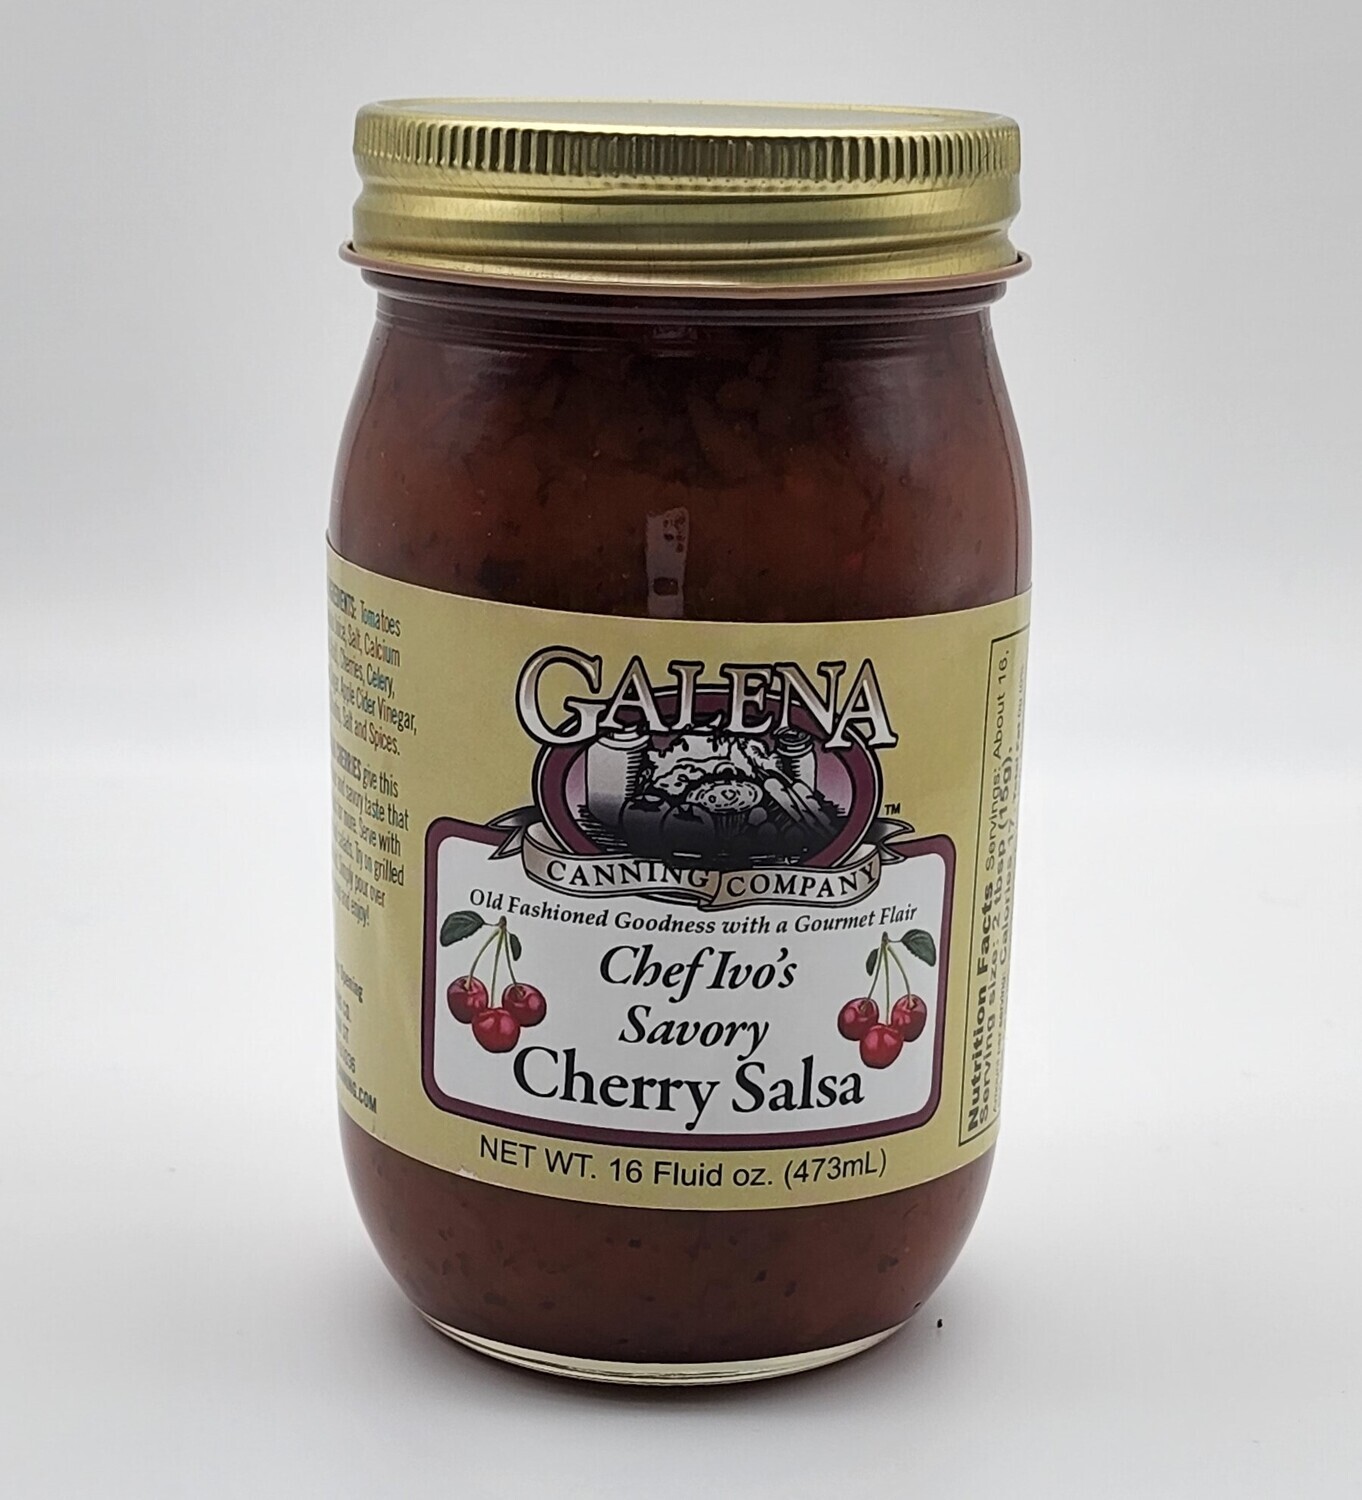 Galena Canning Company Savory Cherry Salsa